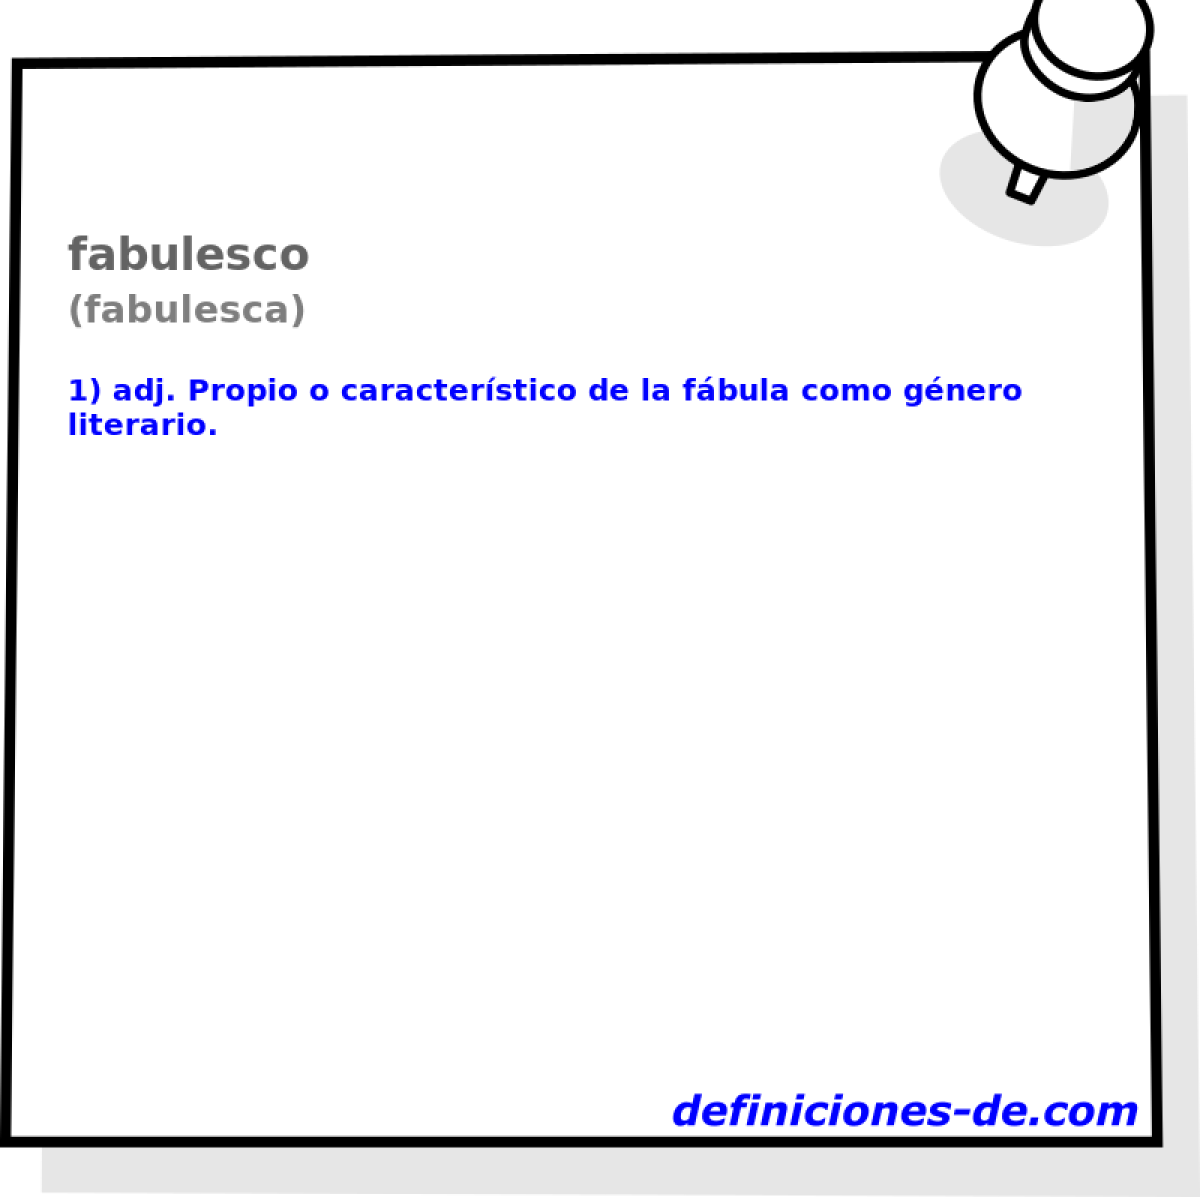 fabulesco (fabulesca)